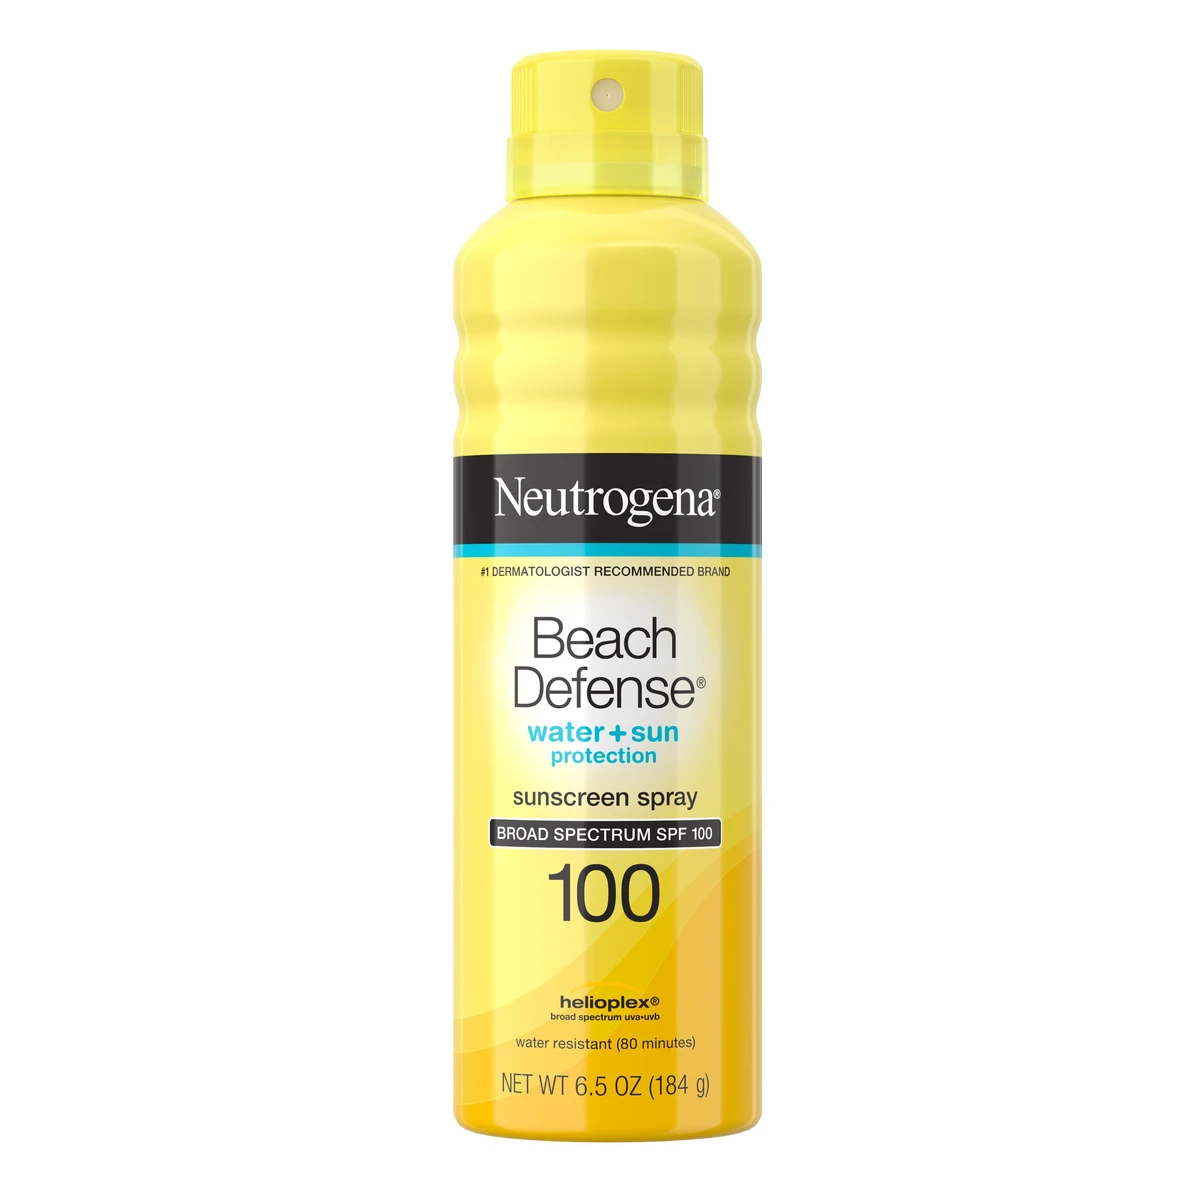 Neutrogena Beach Defense Sunscreen Spray, SPF 100 (2019 formulation)